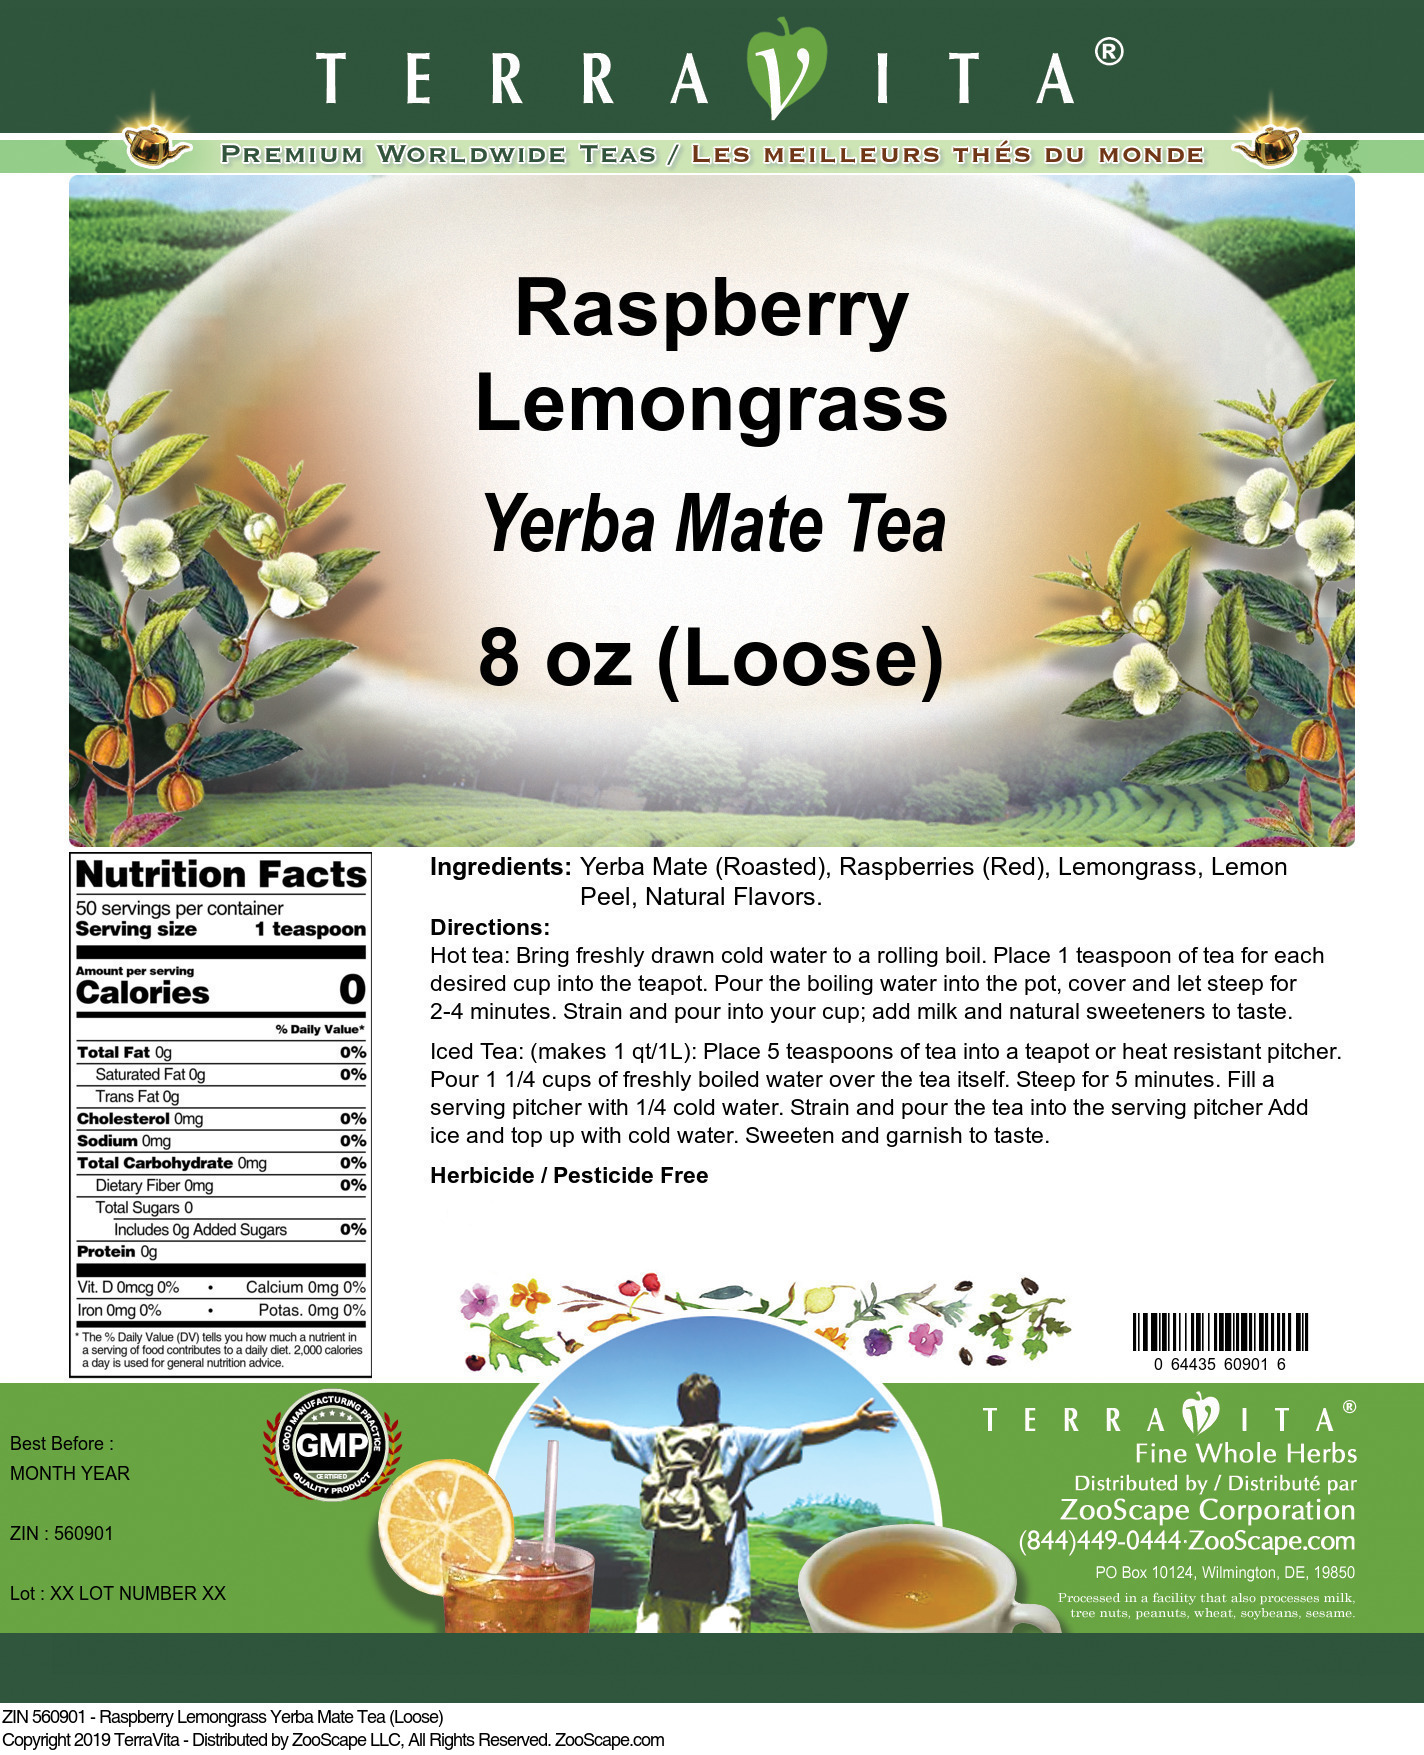 Raspberry Lemongrass Yerba Mate Tea (Loose) - Label